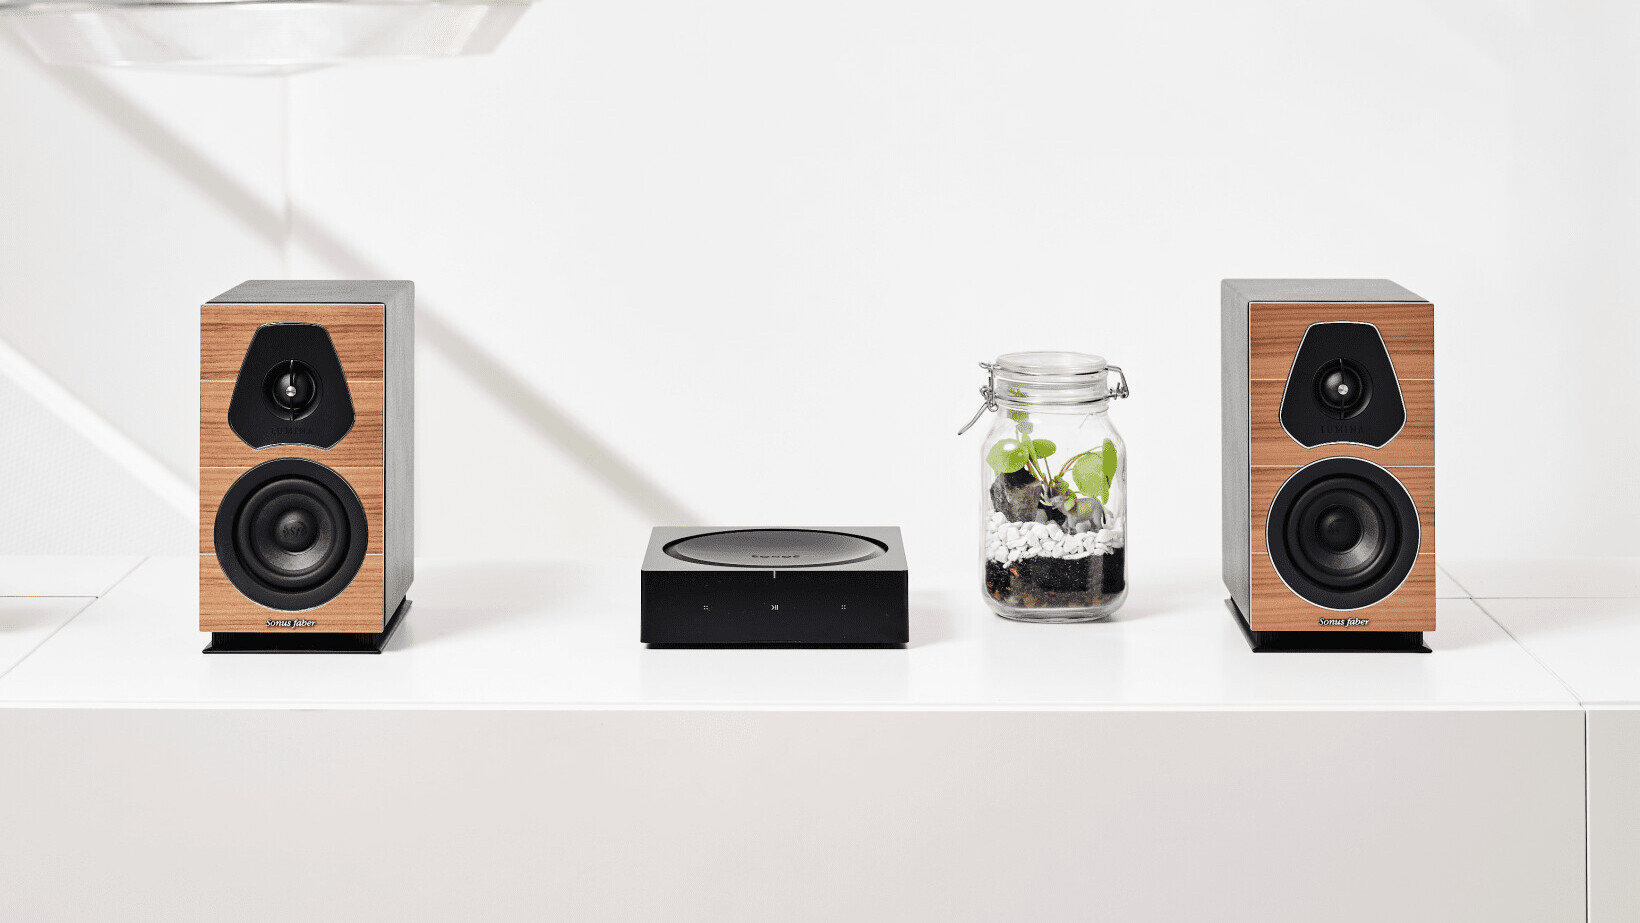 Sonus Faber’s new Lumina speakers offer stunning design at a reasonable price